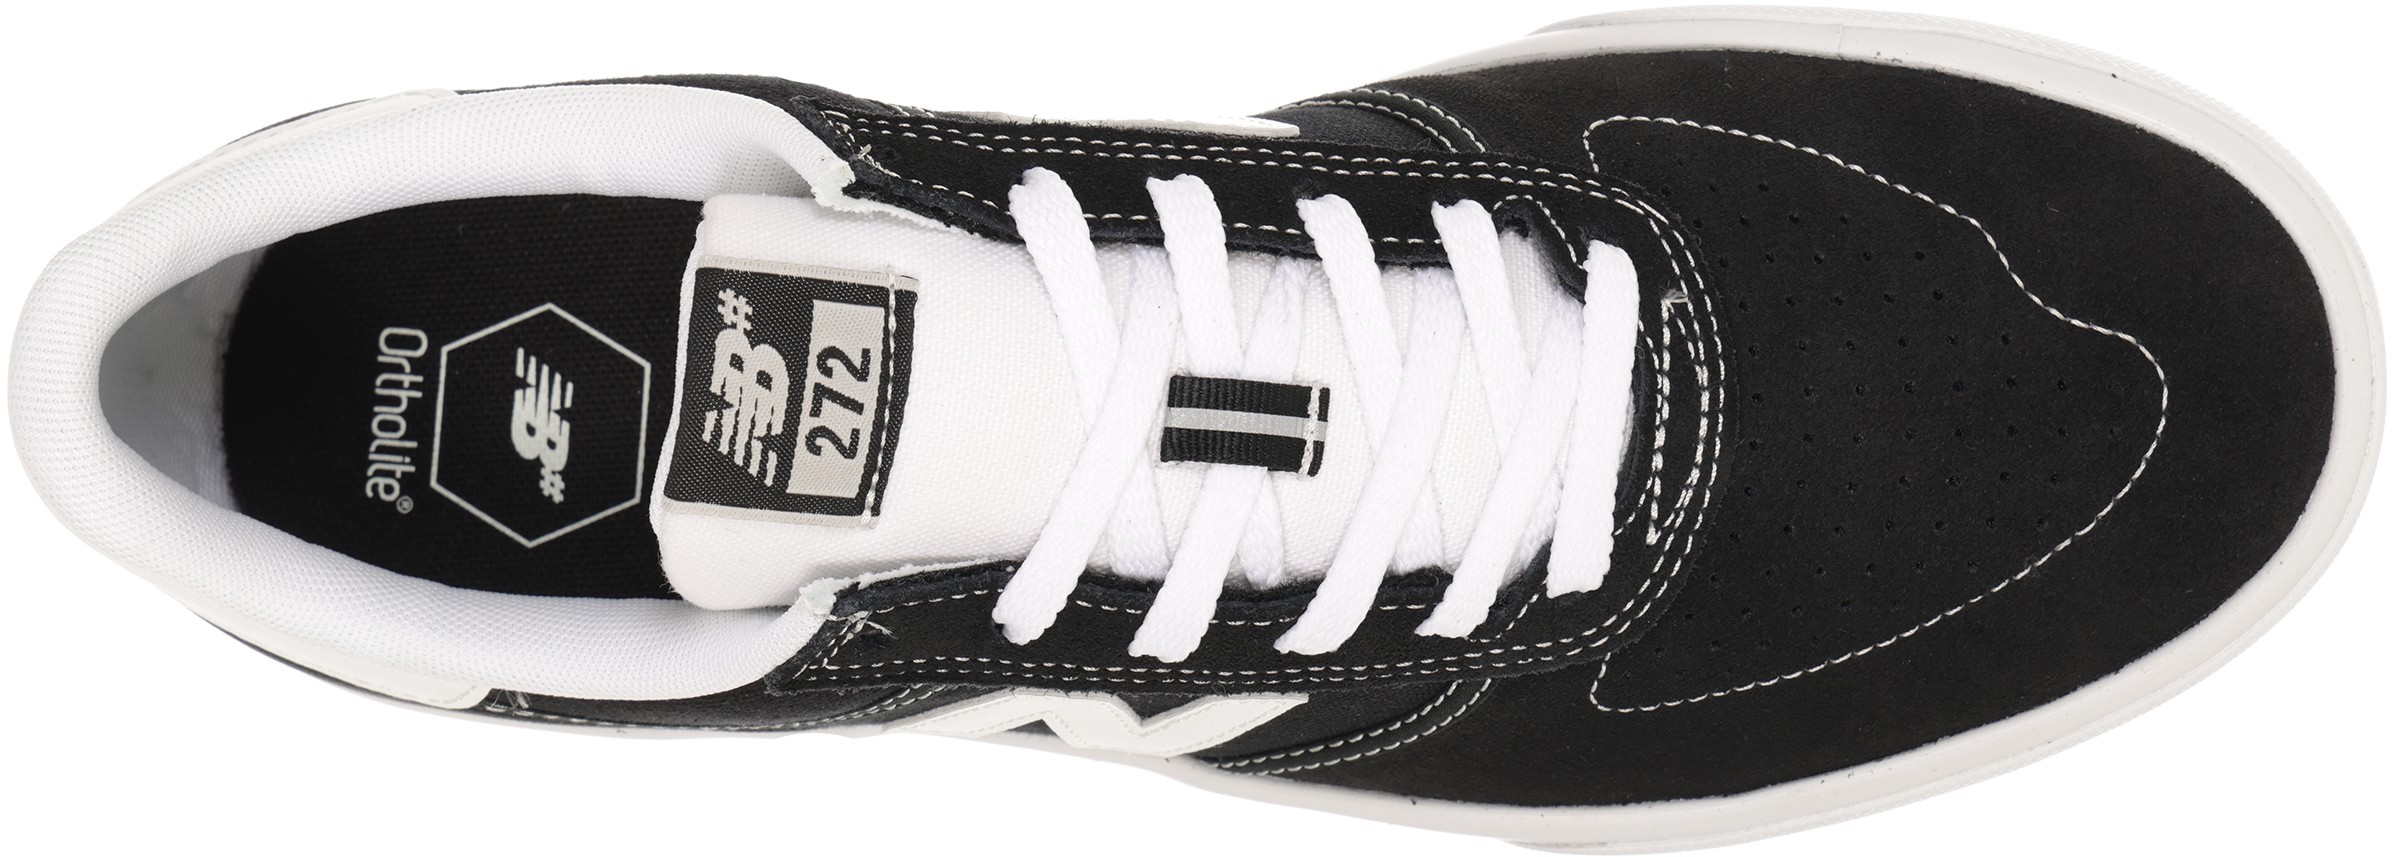 New Balance Numeric 272 Skate Shoes - black/white | Tactics